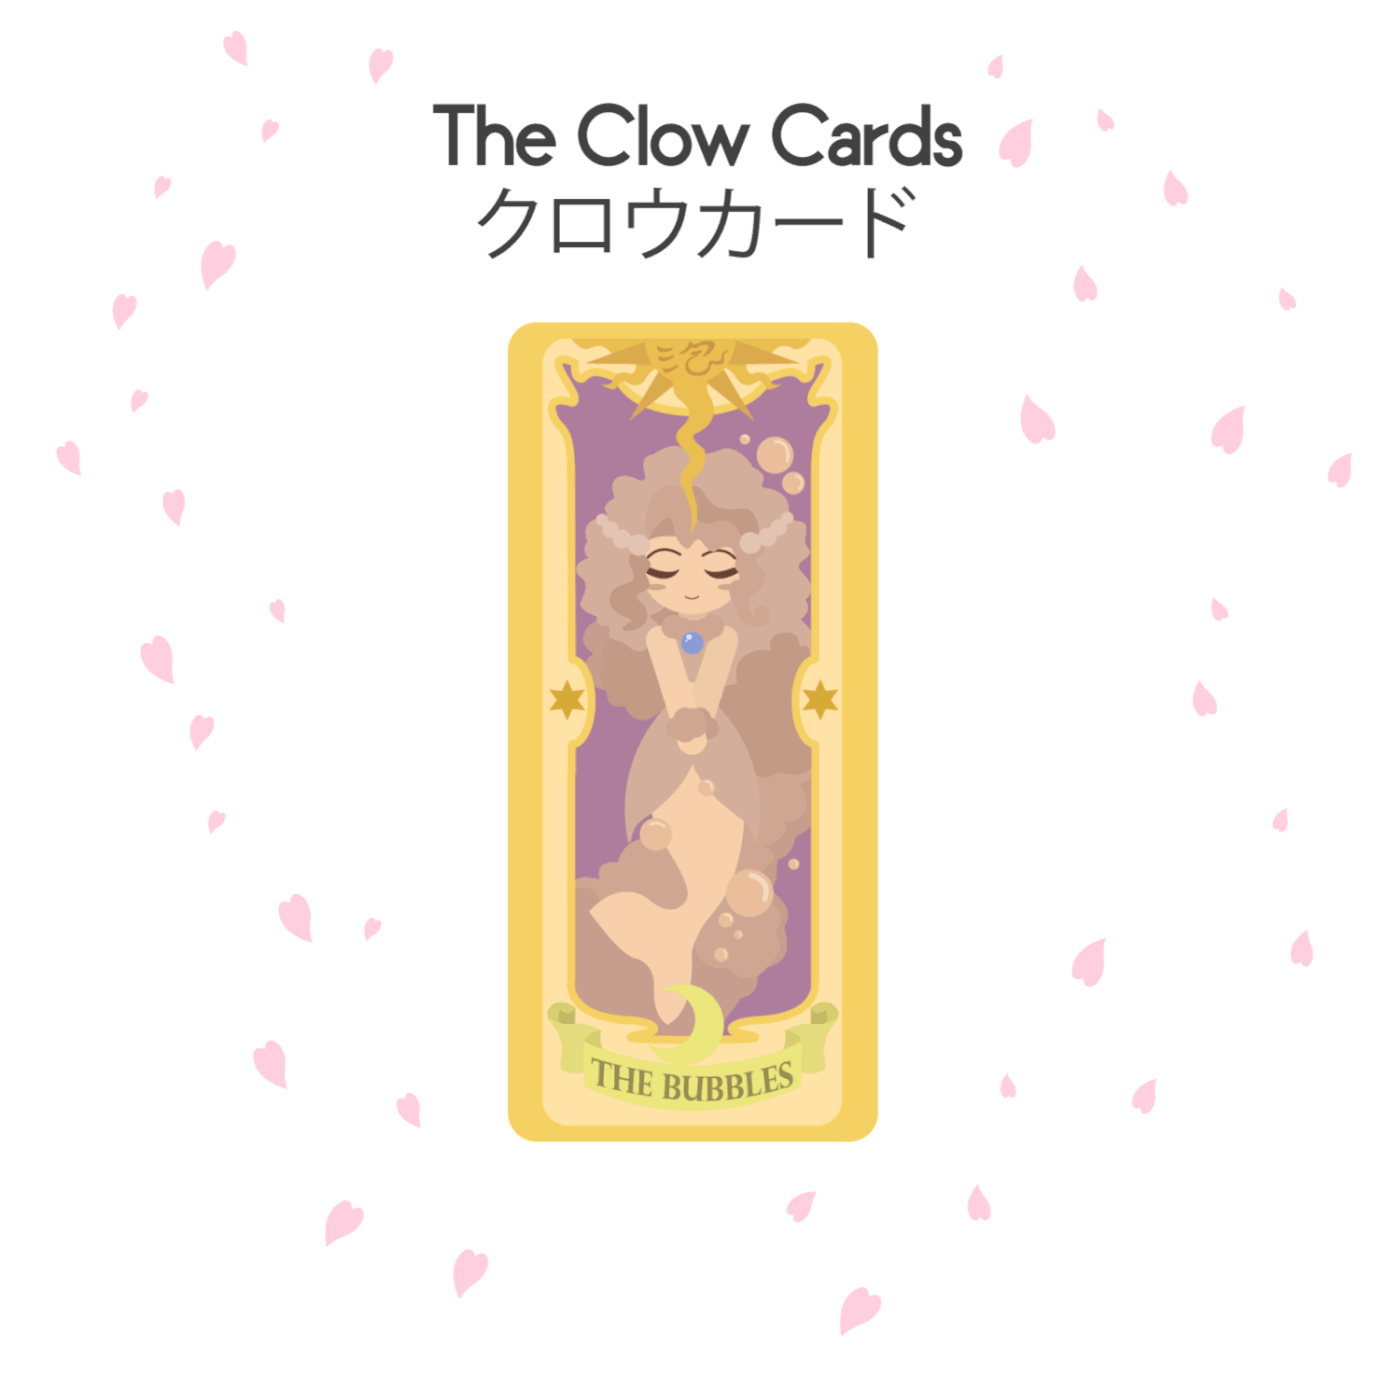 sakura card captor sakura Cards Clow anime animatio ILLUSTRATION  flat flat design after effects Illustrator